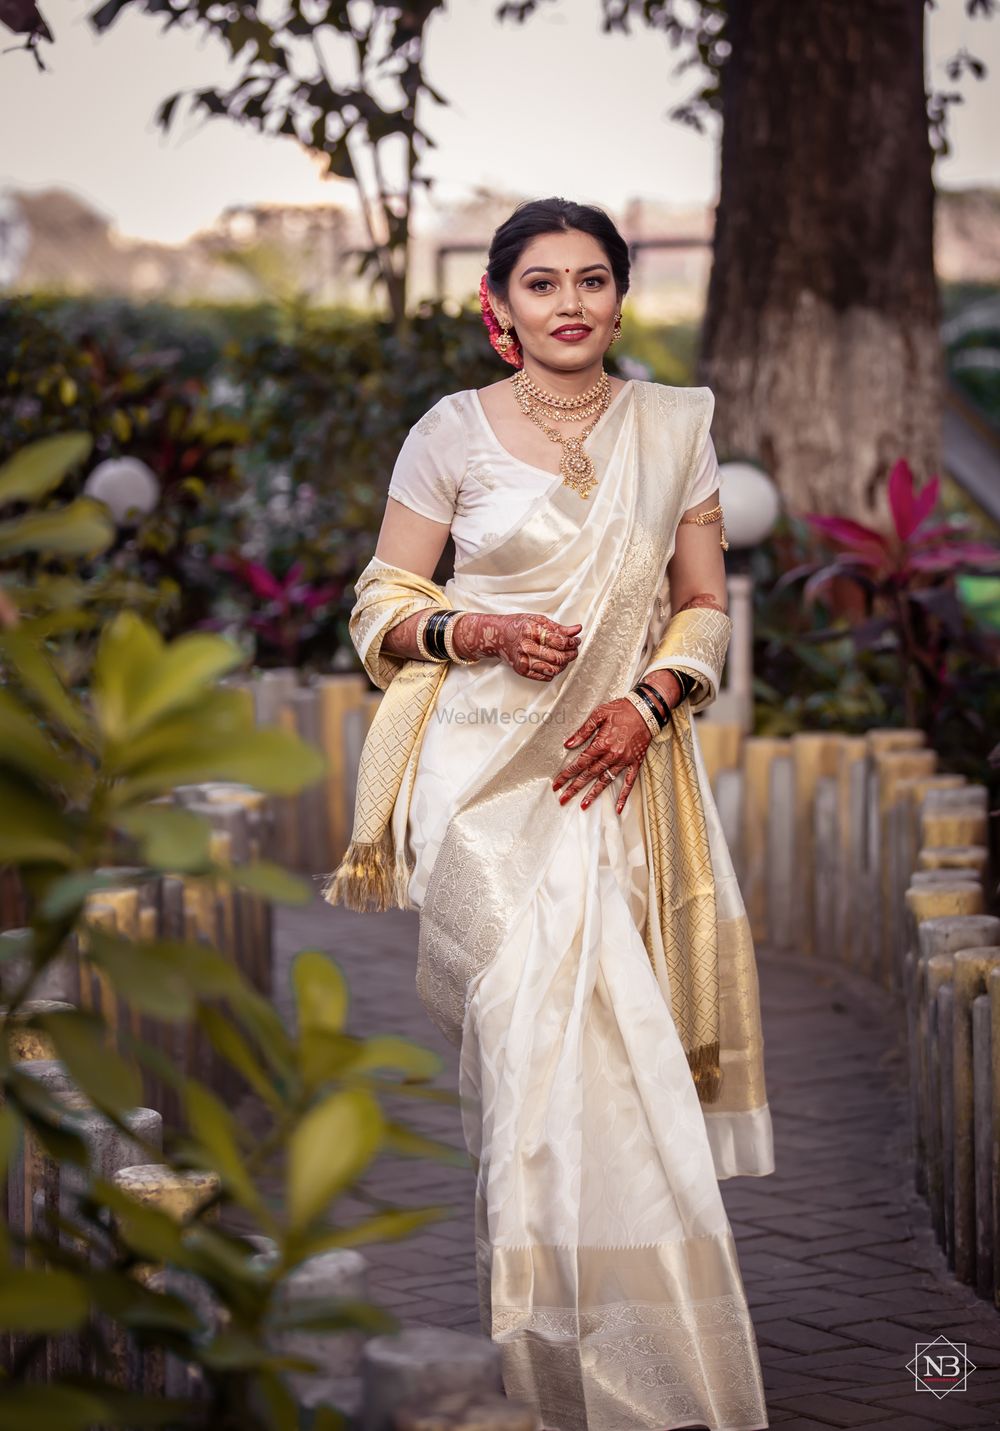 Photo of Bride wearing an ivory saree with a matching banarsi dupatta.